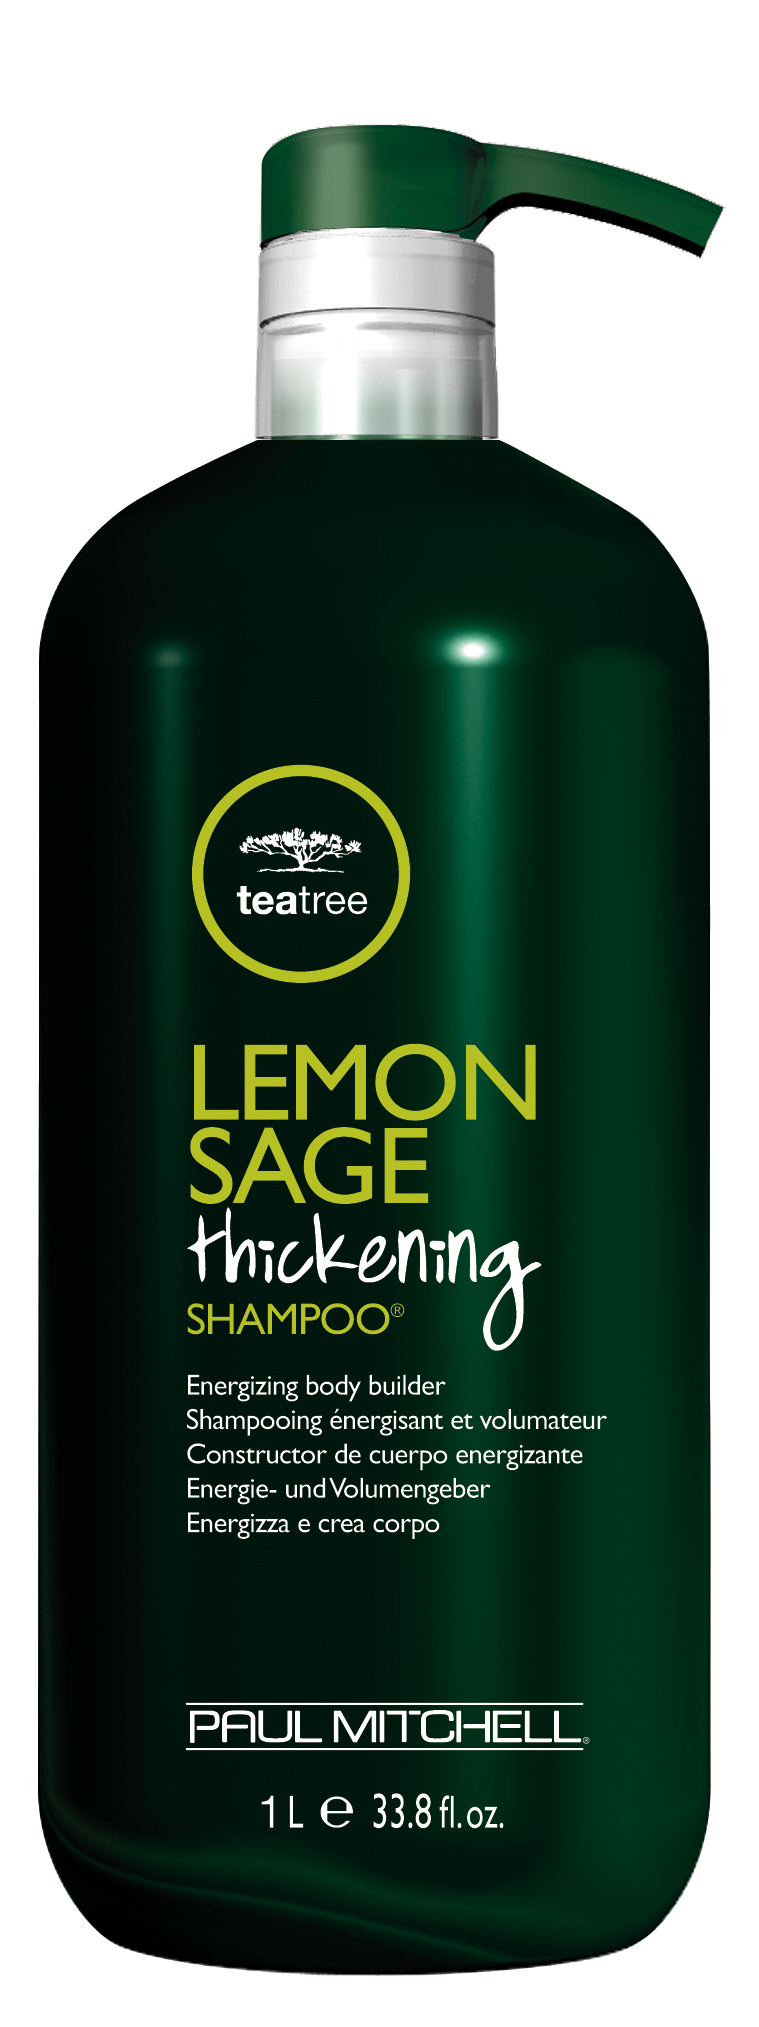 Lemon Sage Thickening Shampoo® obsah (ml): 1000ml